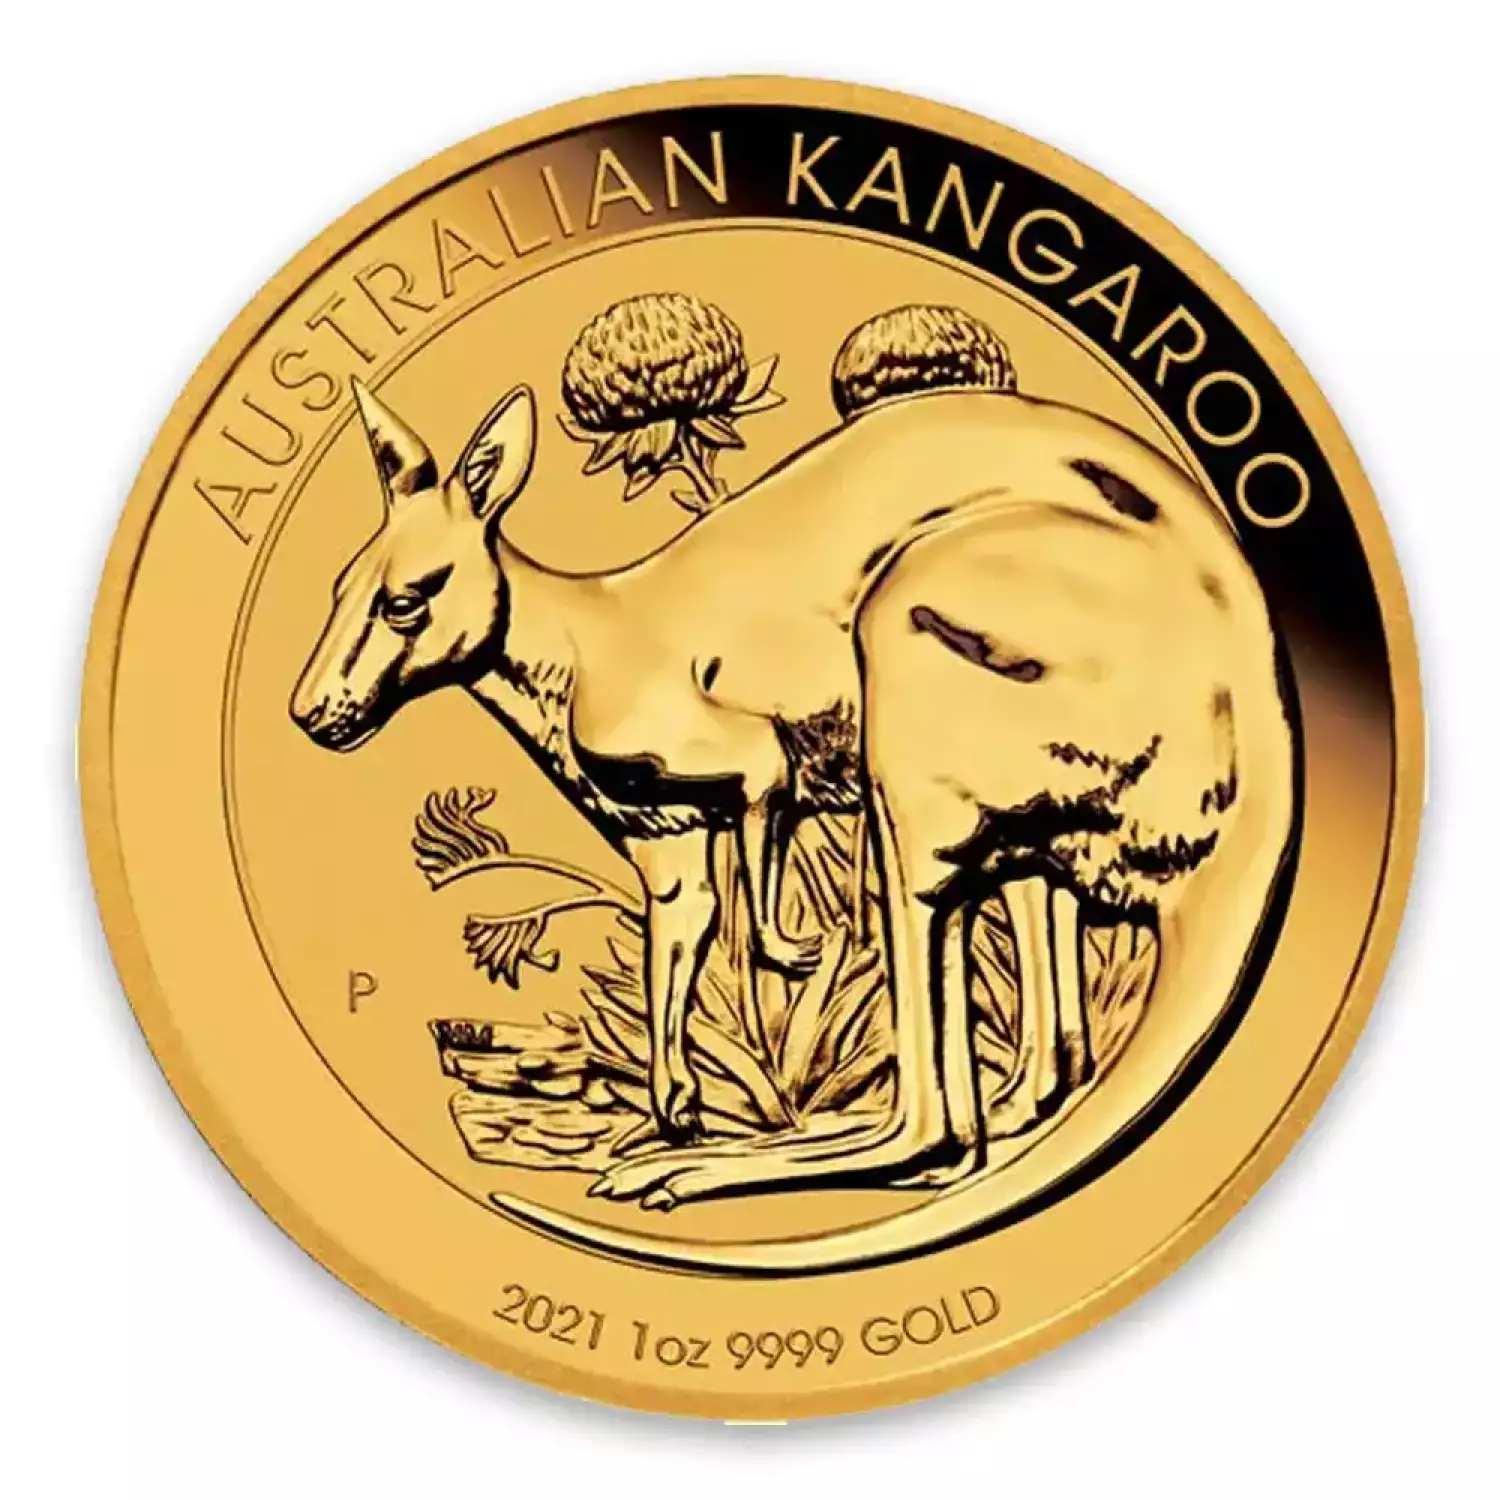 2021 1oz Australian Perth Mint Gold Kangaroo